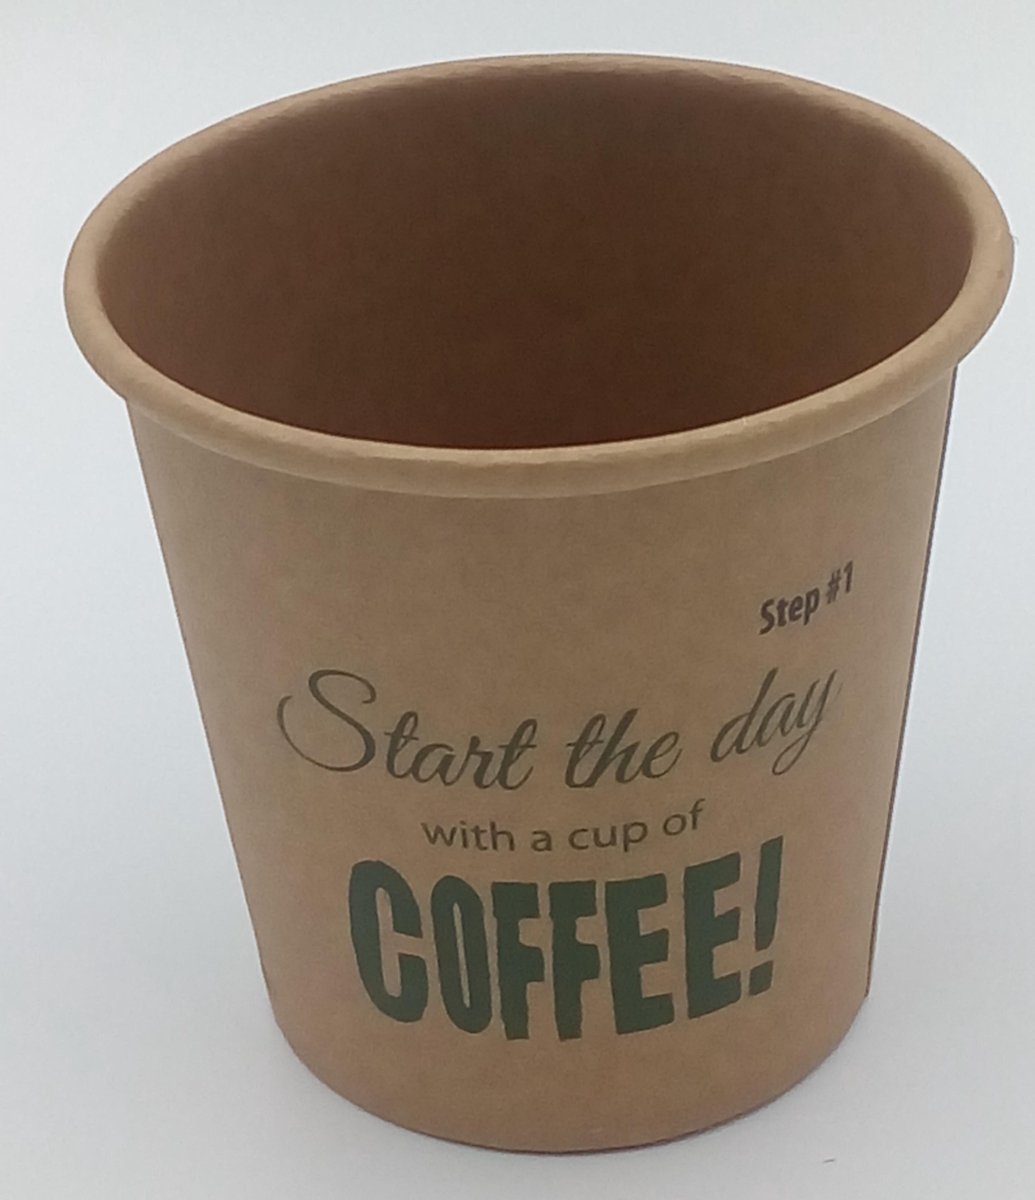 Silly Times koffie beker - biobased paper cups 180 ml - 50 stuks